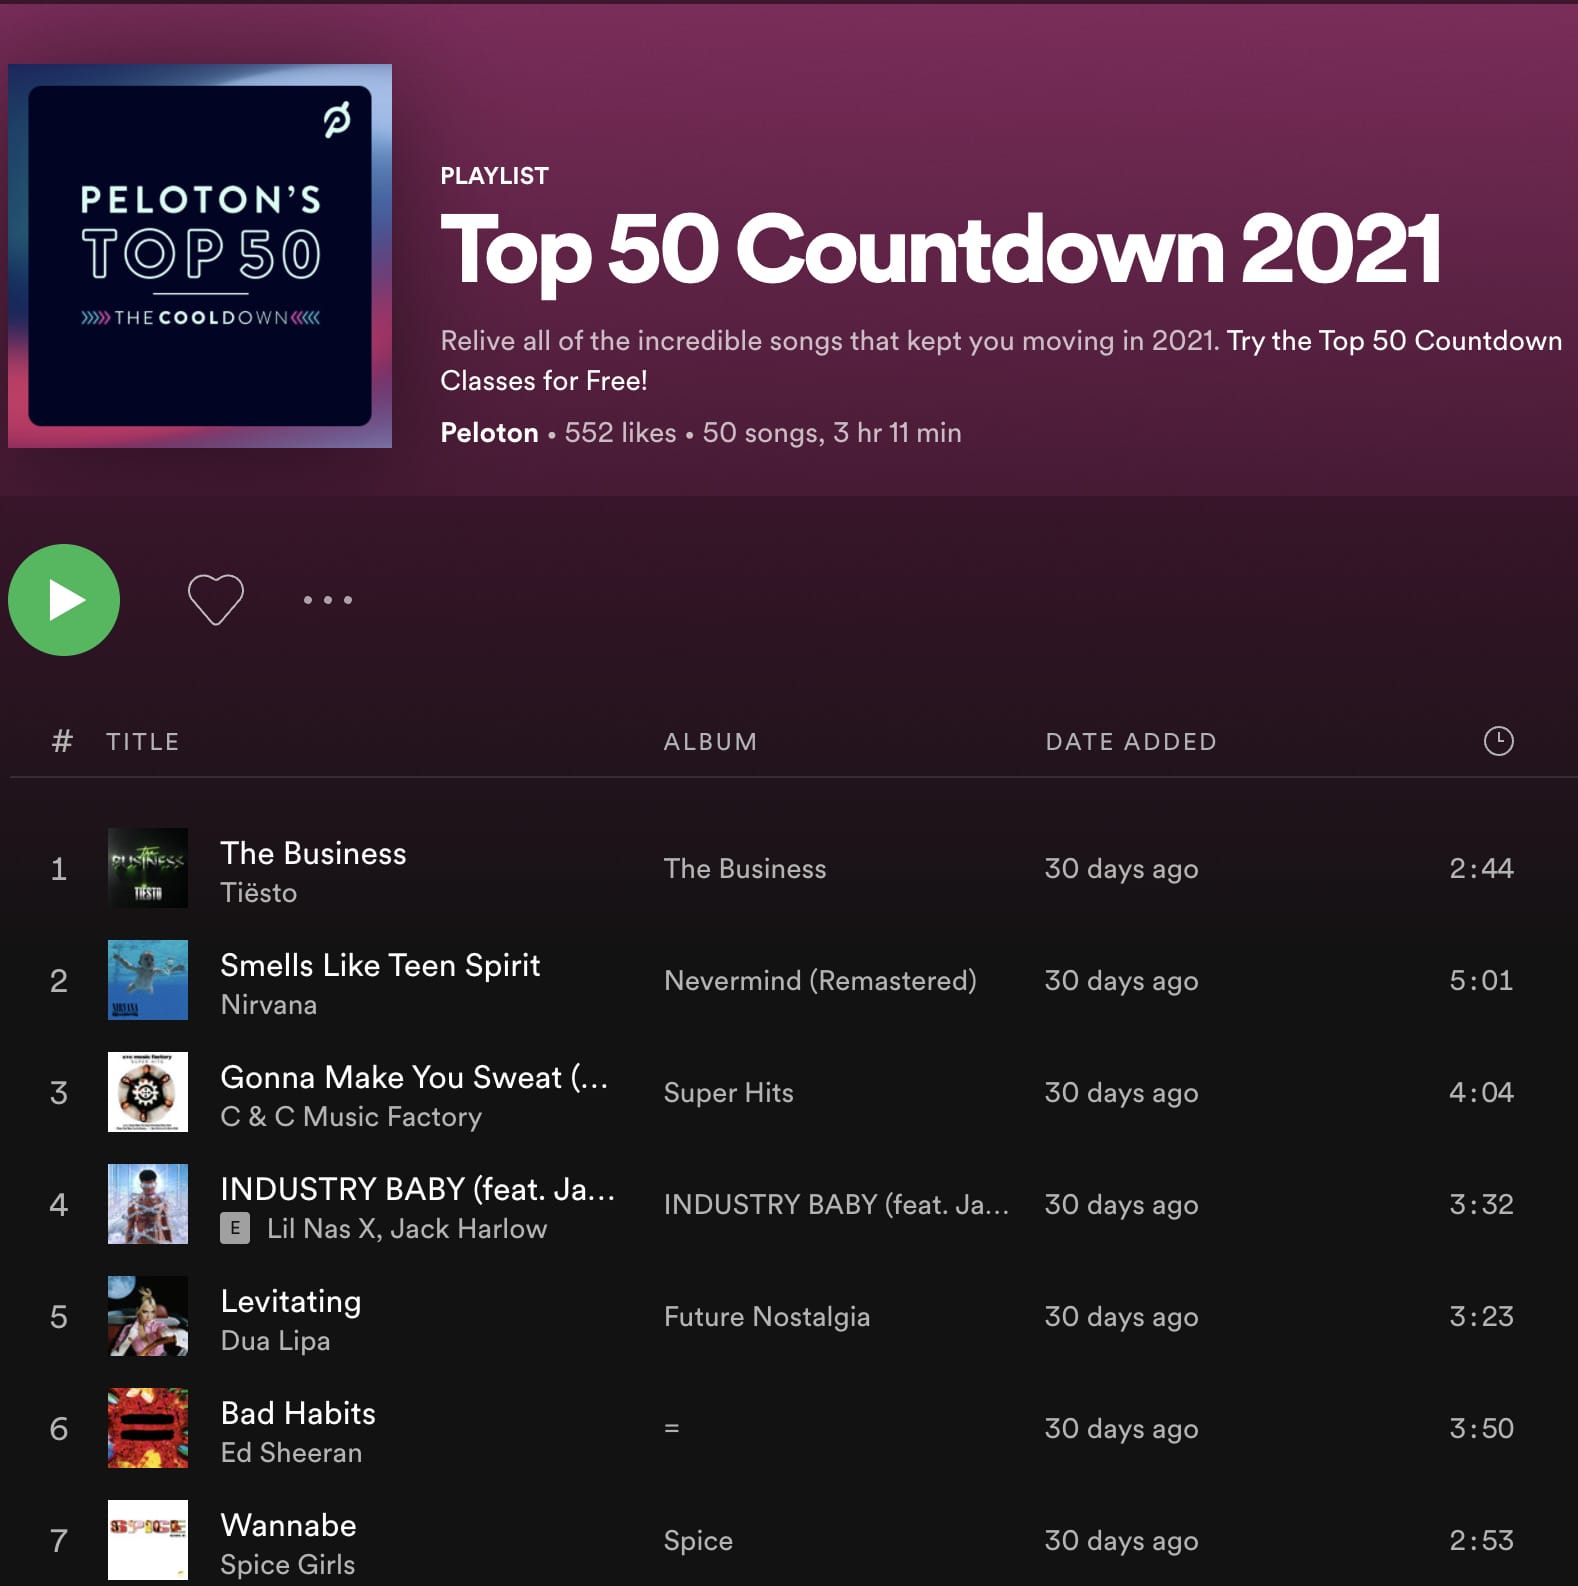 Pop Songs 2023 (Best Hit Music Playlist) on Spotify - TOP 50